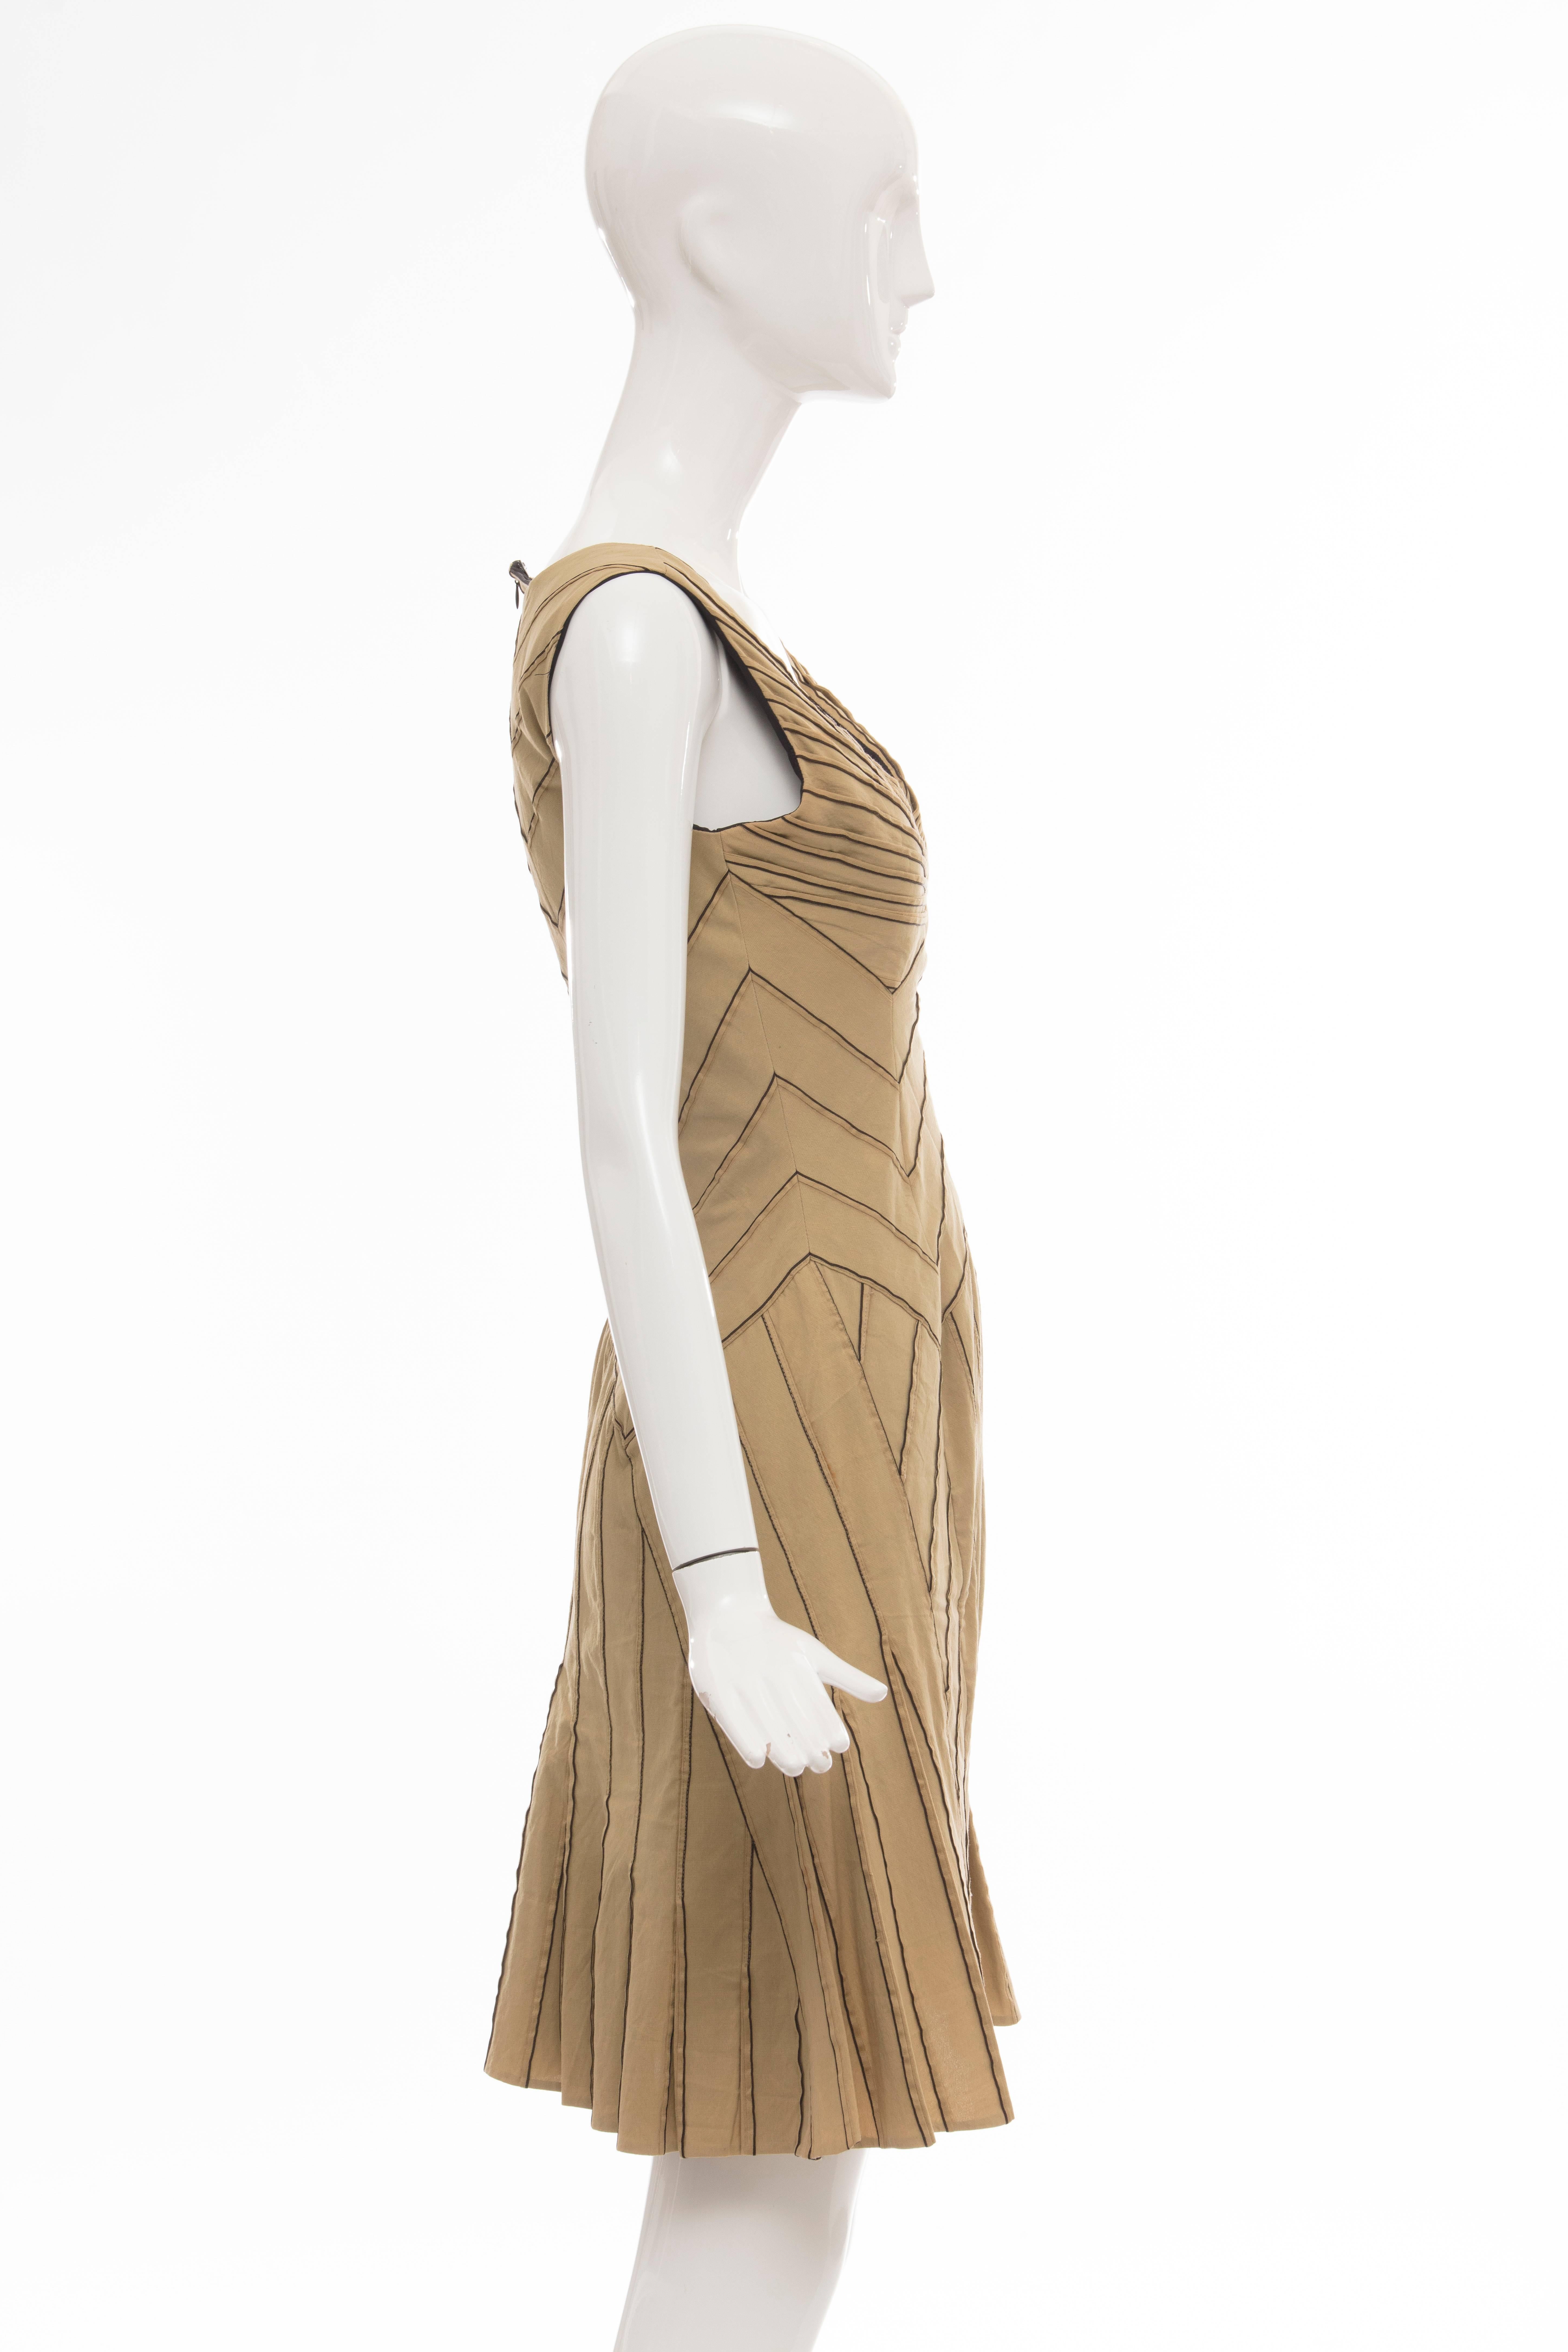 Zac Posen Silk Cotton Khaki Runway Dress, Spring 2003 For Sale 1